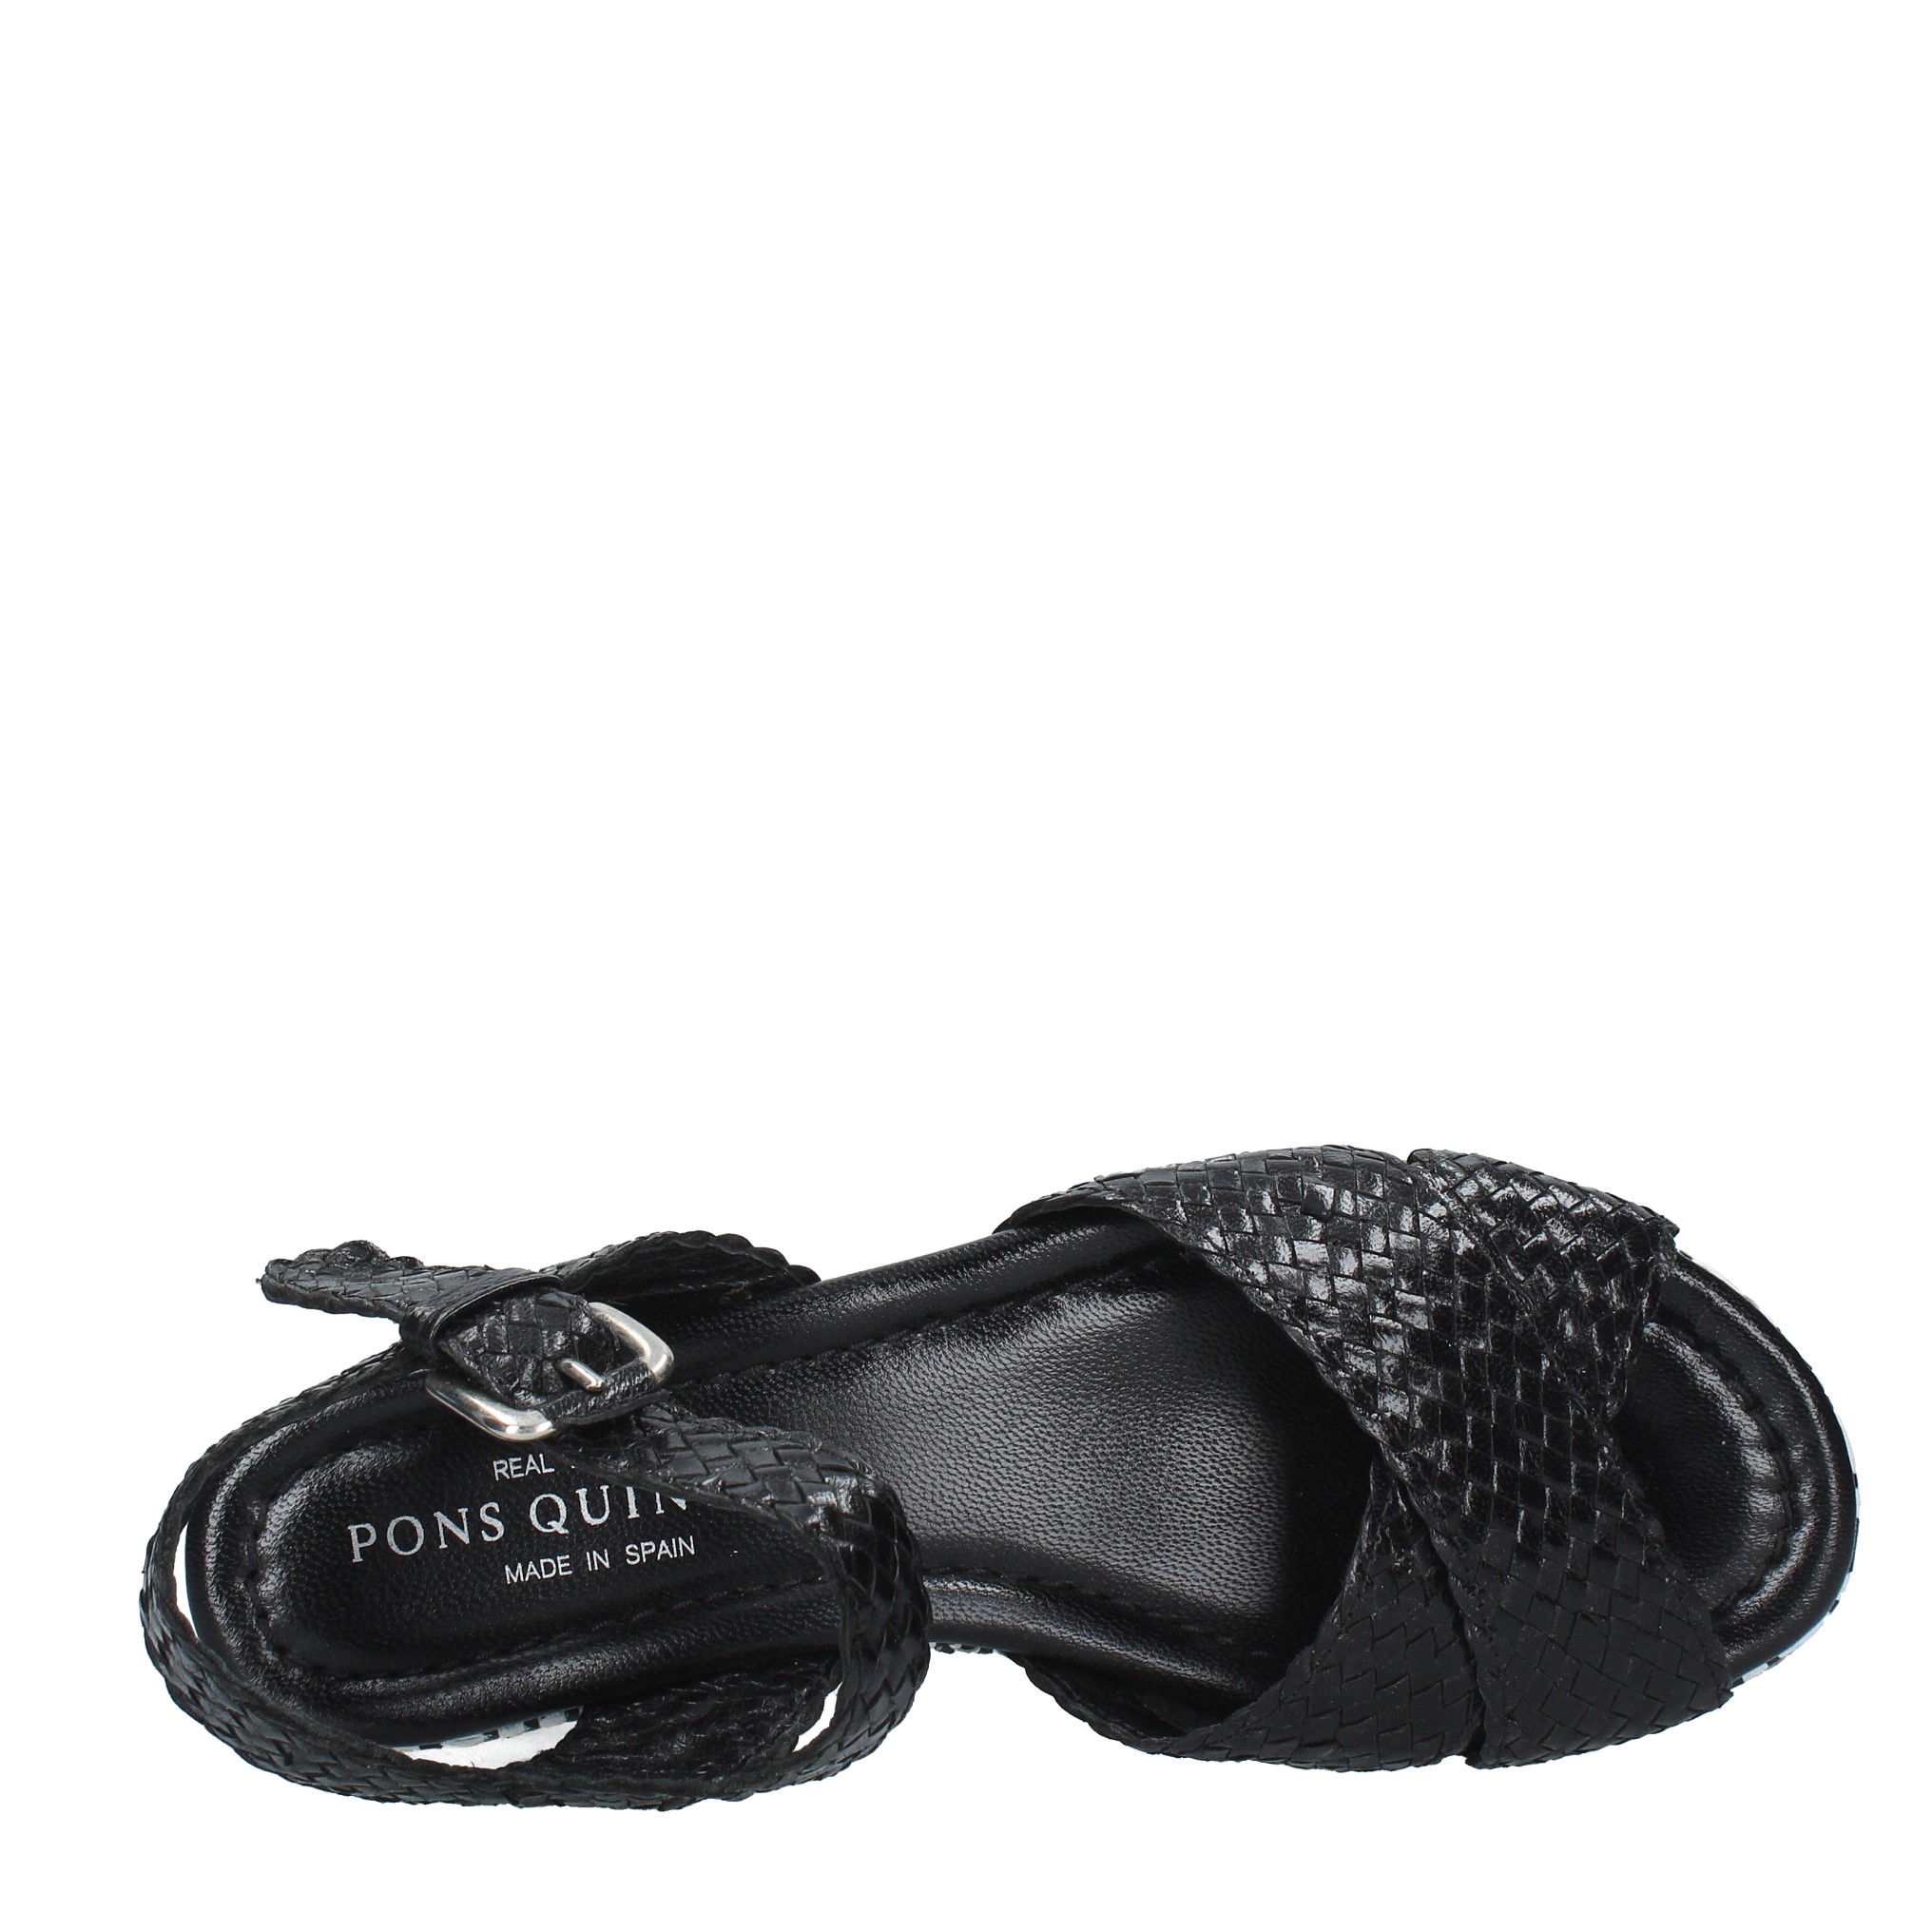 Sandals Black and White - PONS QUINTANA - Ginevra calzature